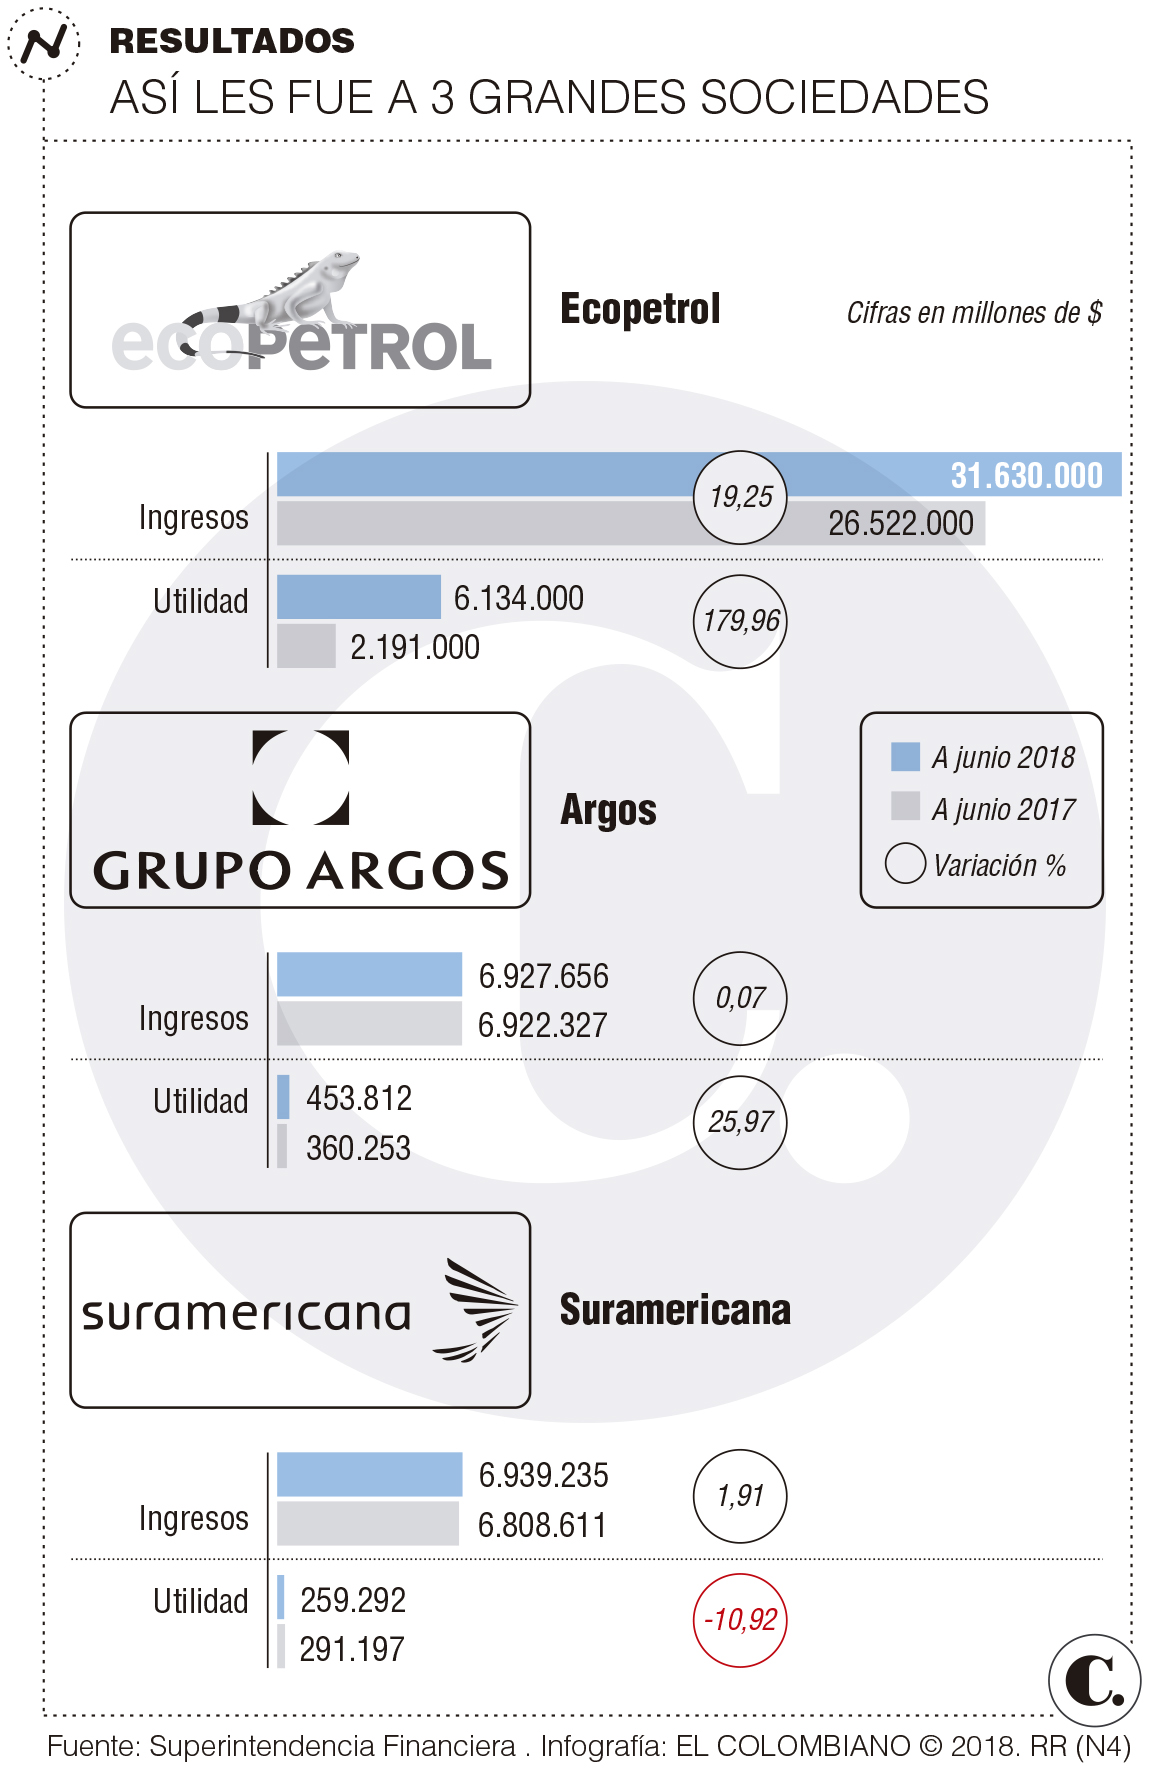 Ecopetrol, Suramericana y Grupo Argos aumentaron sus ingresos